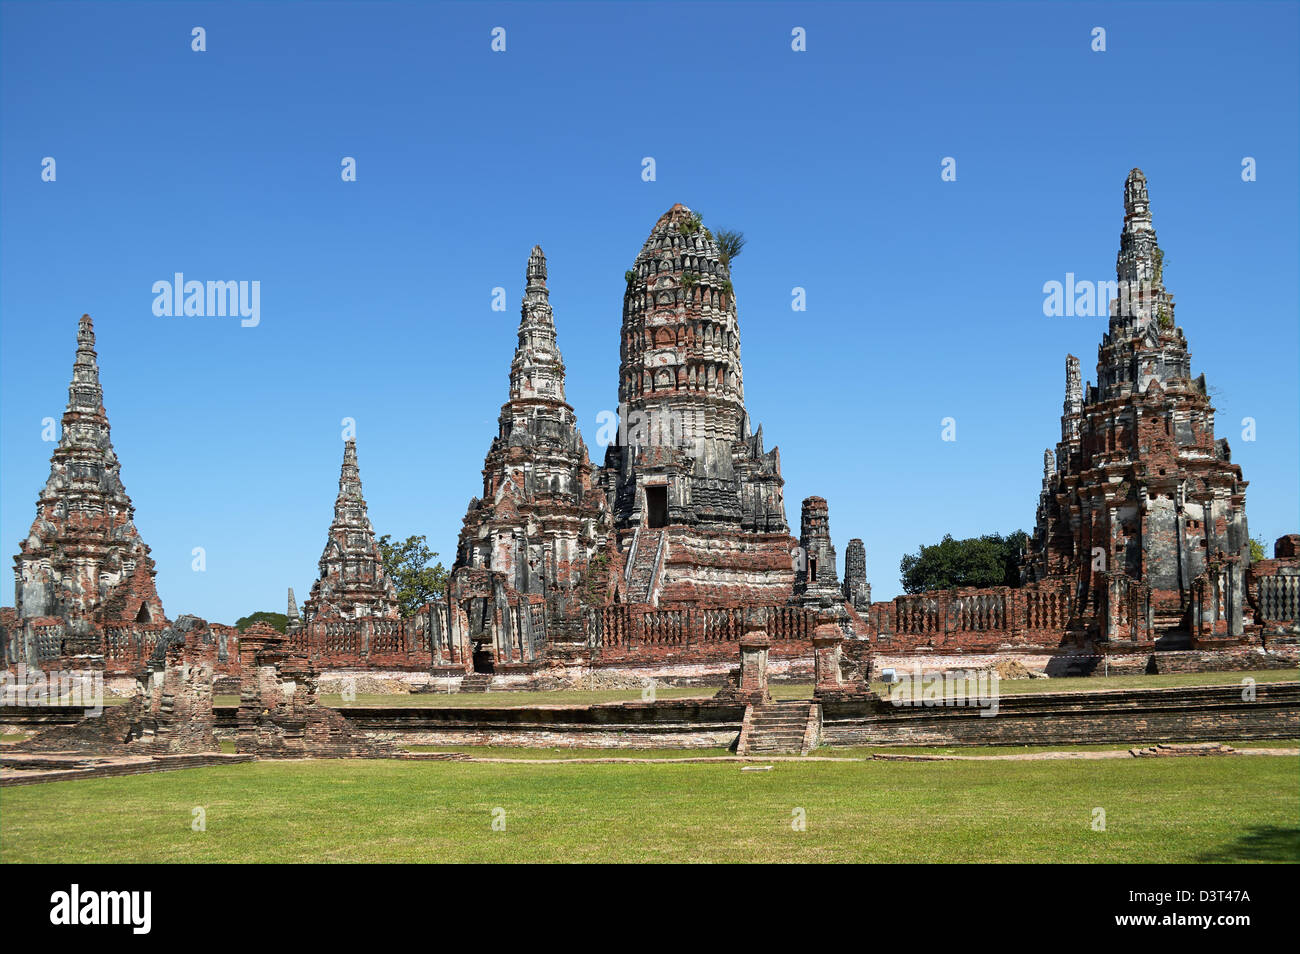 Fragments of architectural objects Wat Chaiwatthanaram Stock Photo